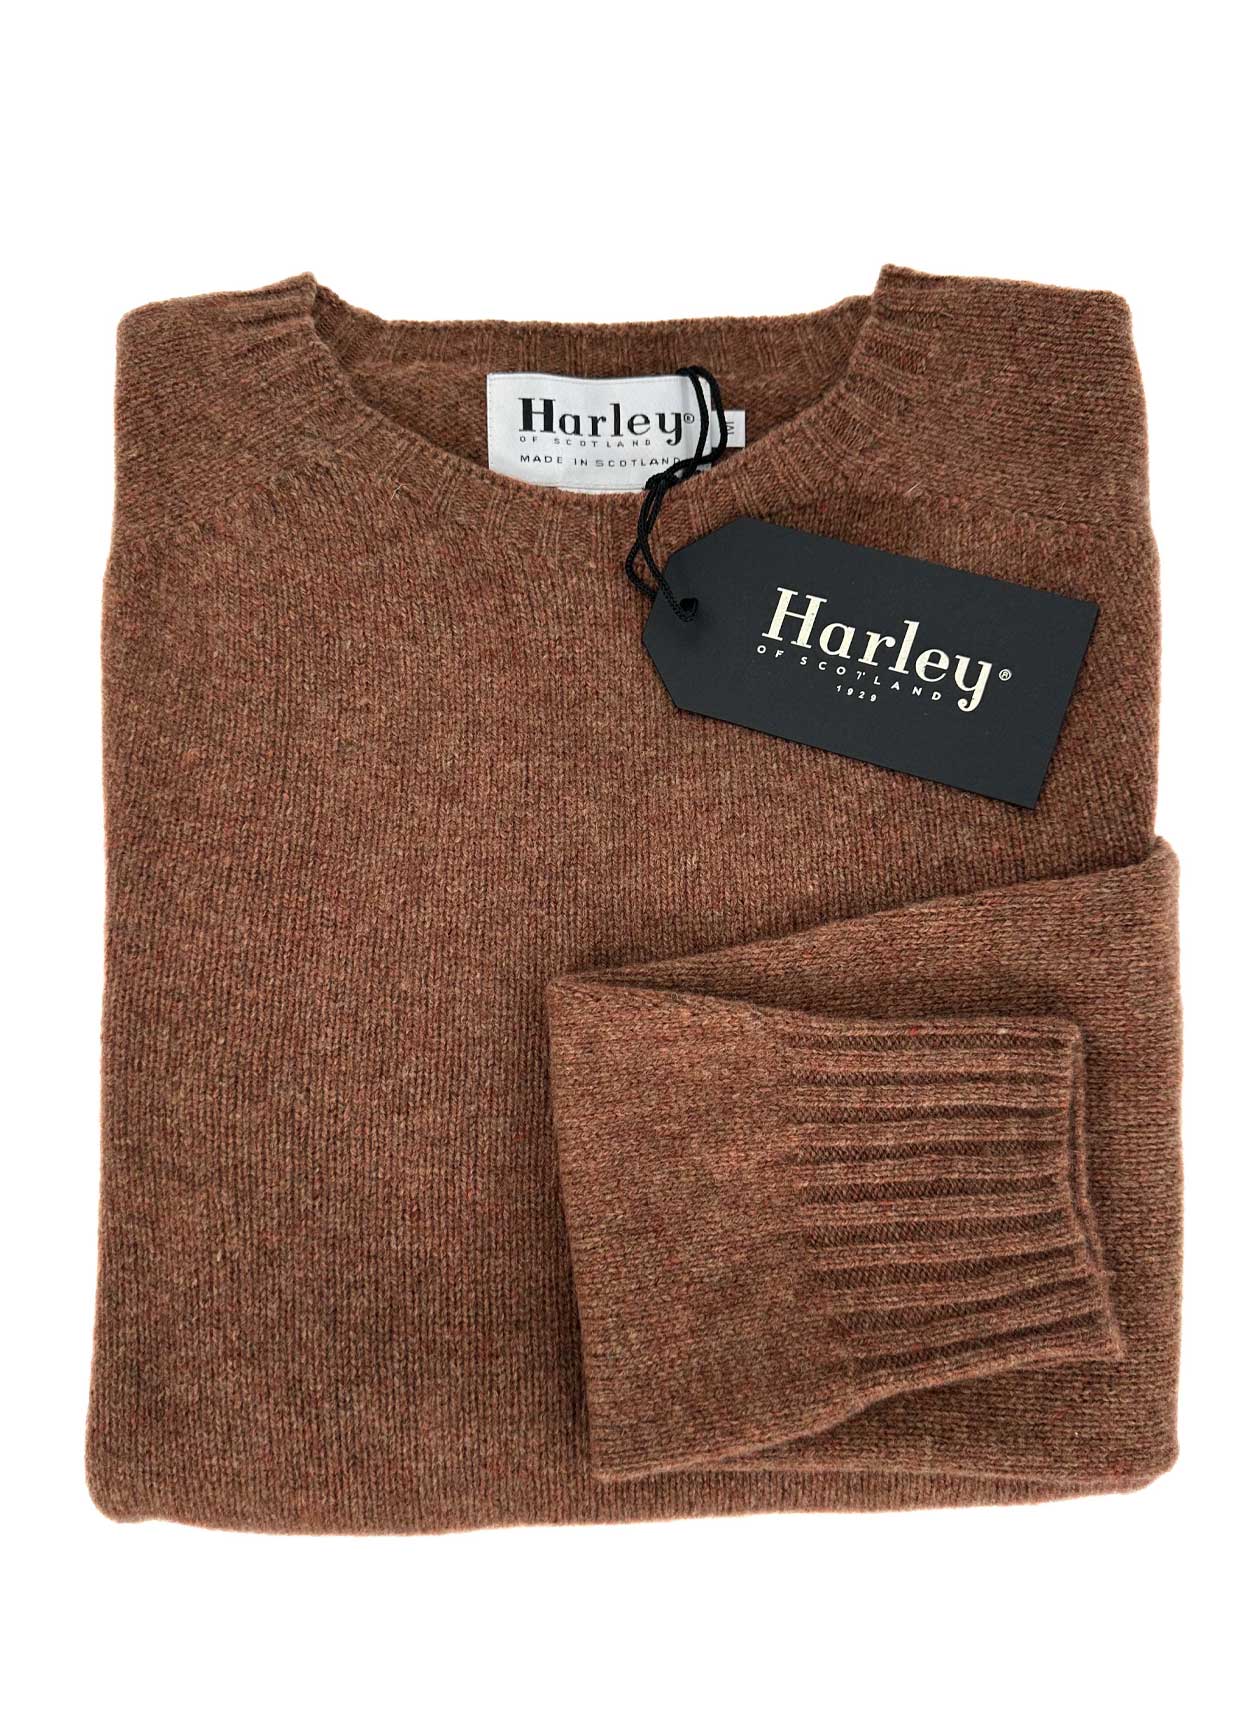 Crewneck Sweater in Hazelnut by Harley of Scotland - Hansen's Clothing